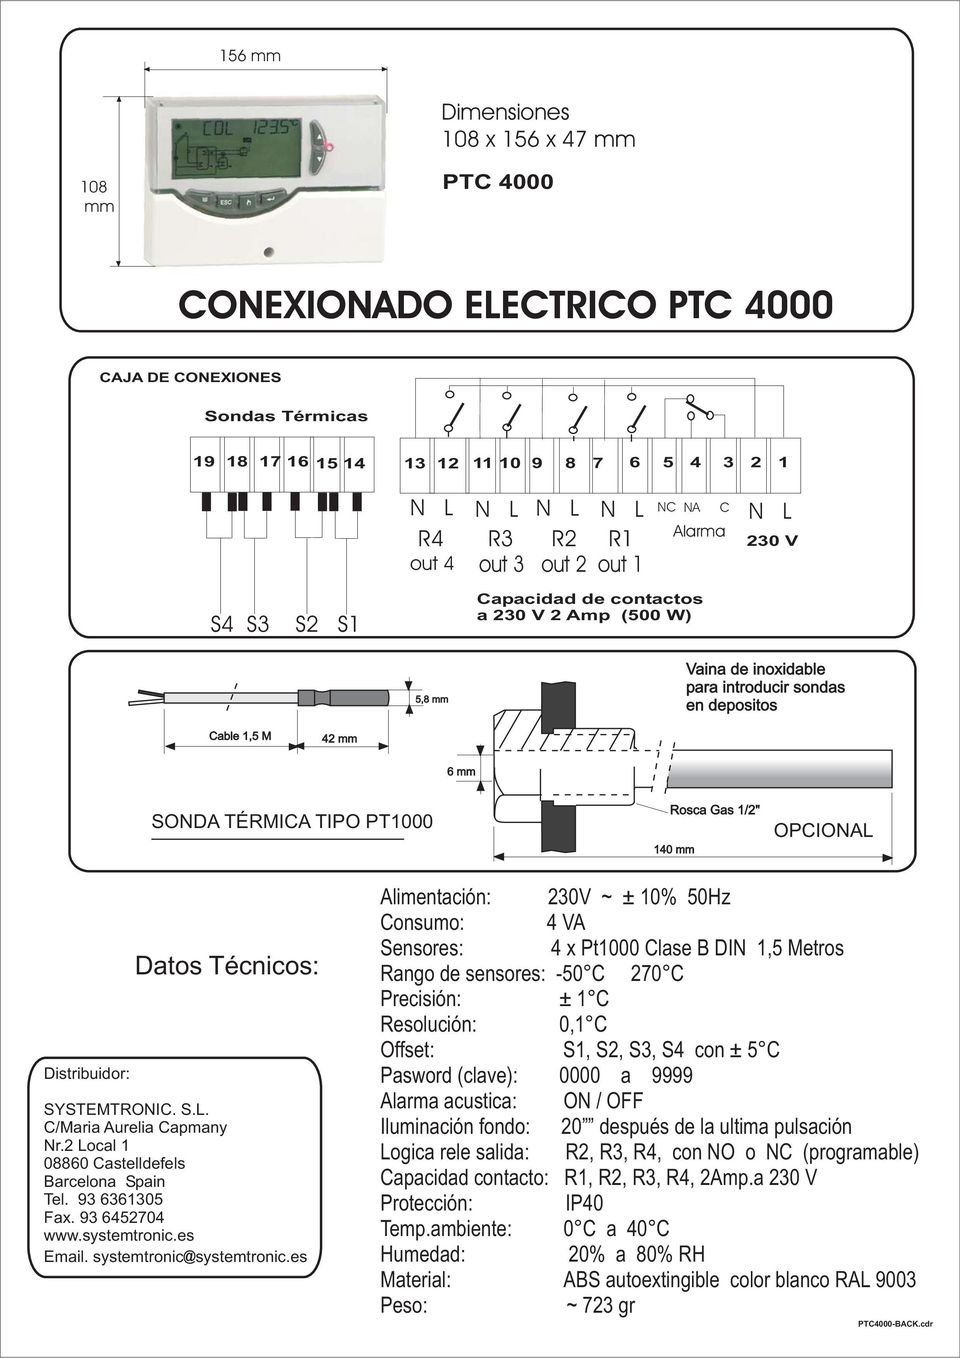 Rosca Gas 1/2" 140 mm OPCIONAL Distribuidor: Datos écnicos: SYSEMRONIC. S.L. C/Maria Aurelia Capmany Nr.2 Local 1 08860 Castelldefels Barcelona Spain el. 93 6361305 Fax. 93 6452704 www.systemtronic.